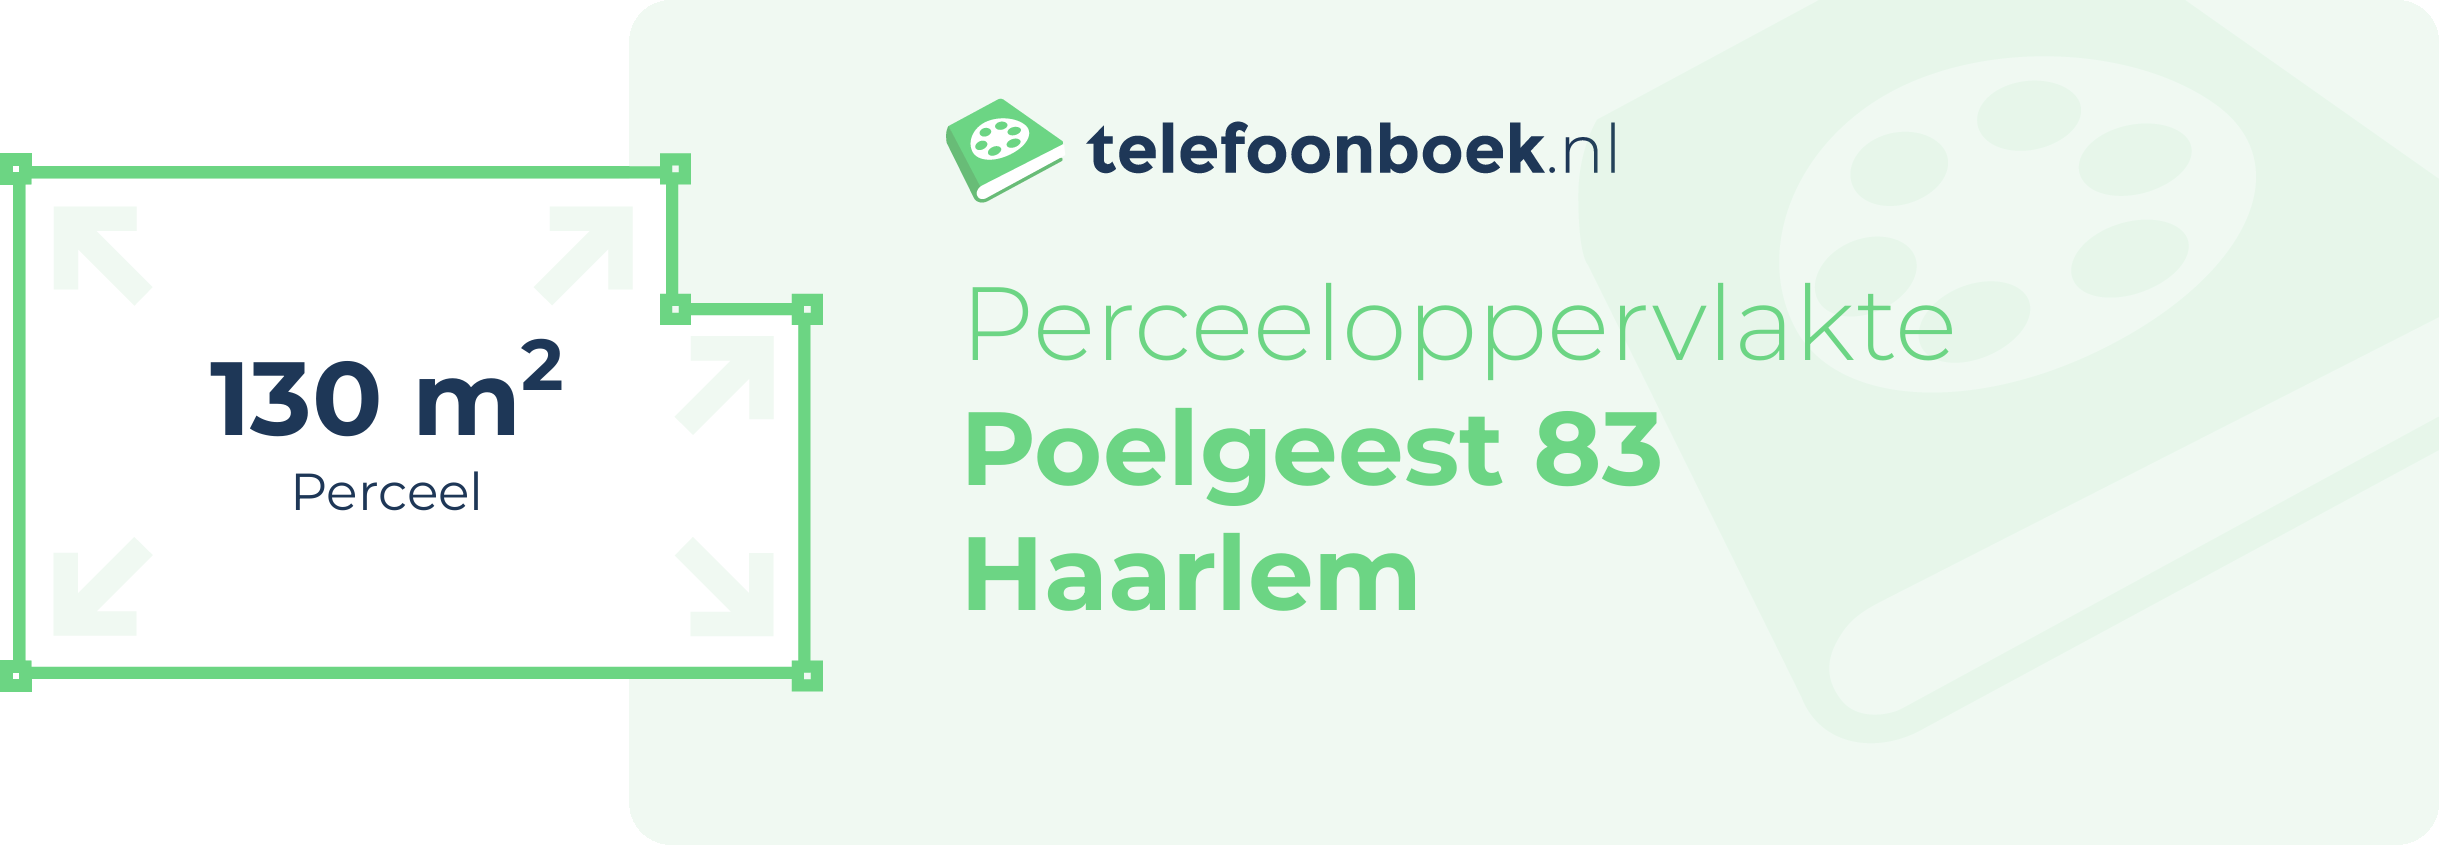 Perceeloppervlakte Poelgeest 83 Haarlem